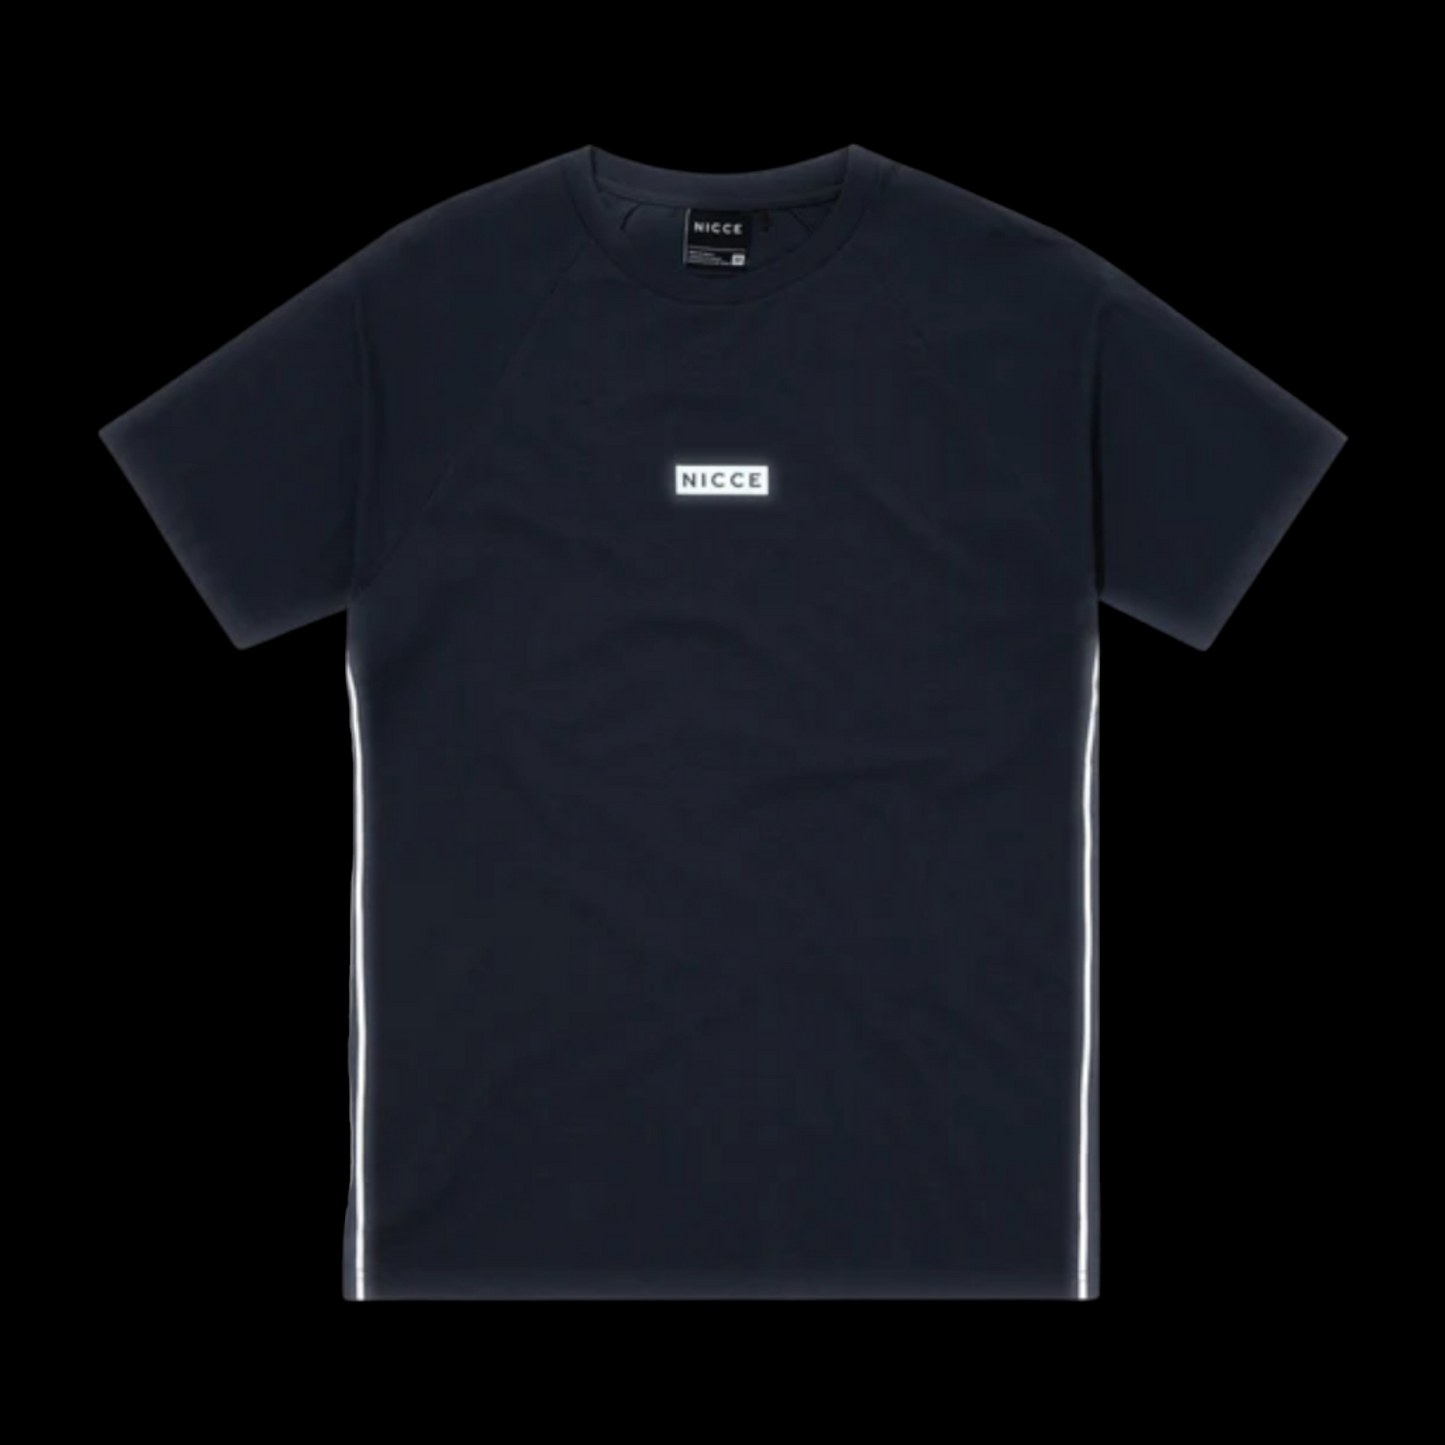 Nicce Base Tech t-shirt - Typhoon blue